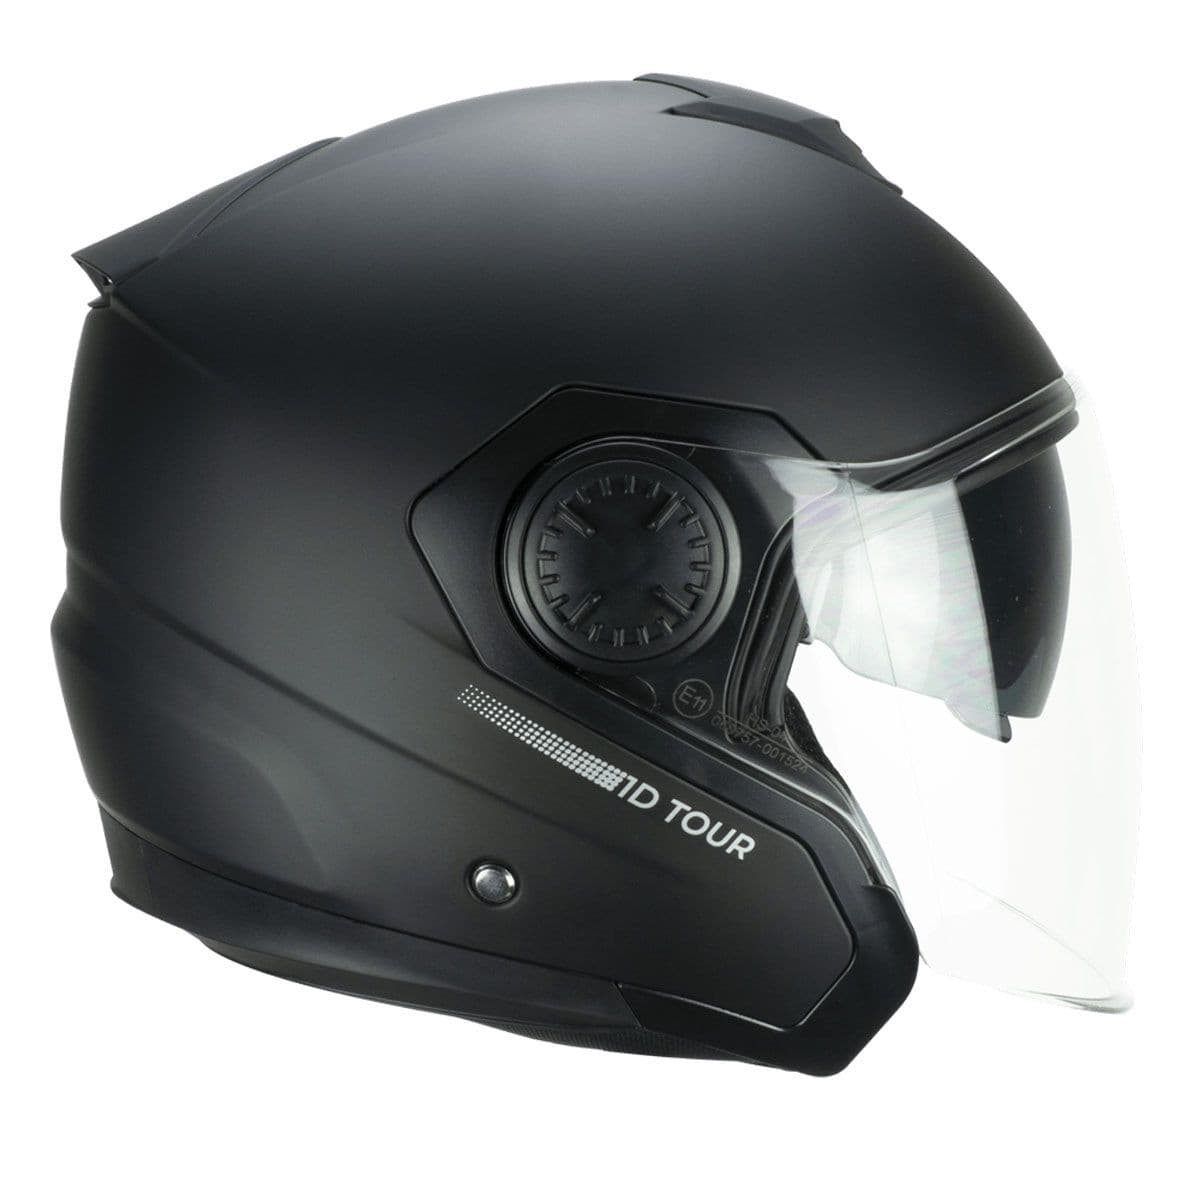 Ska-P Jet 1DH Tour Mono Matt Black ECE22-06 Helmet With Long Visor and Sun Visor